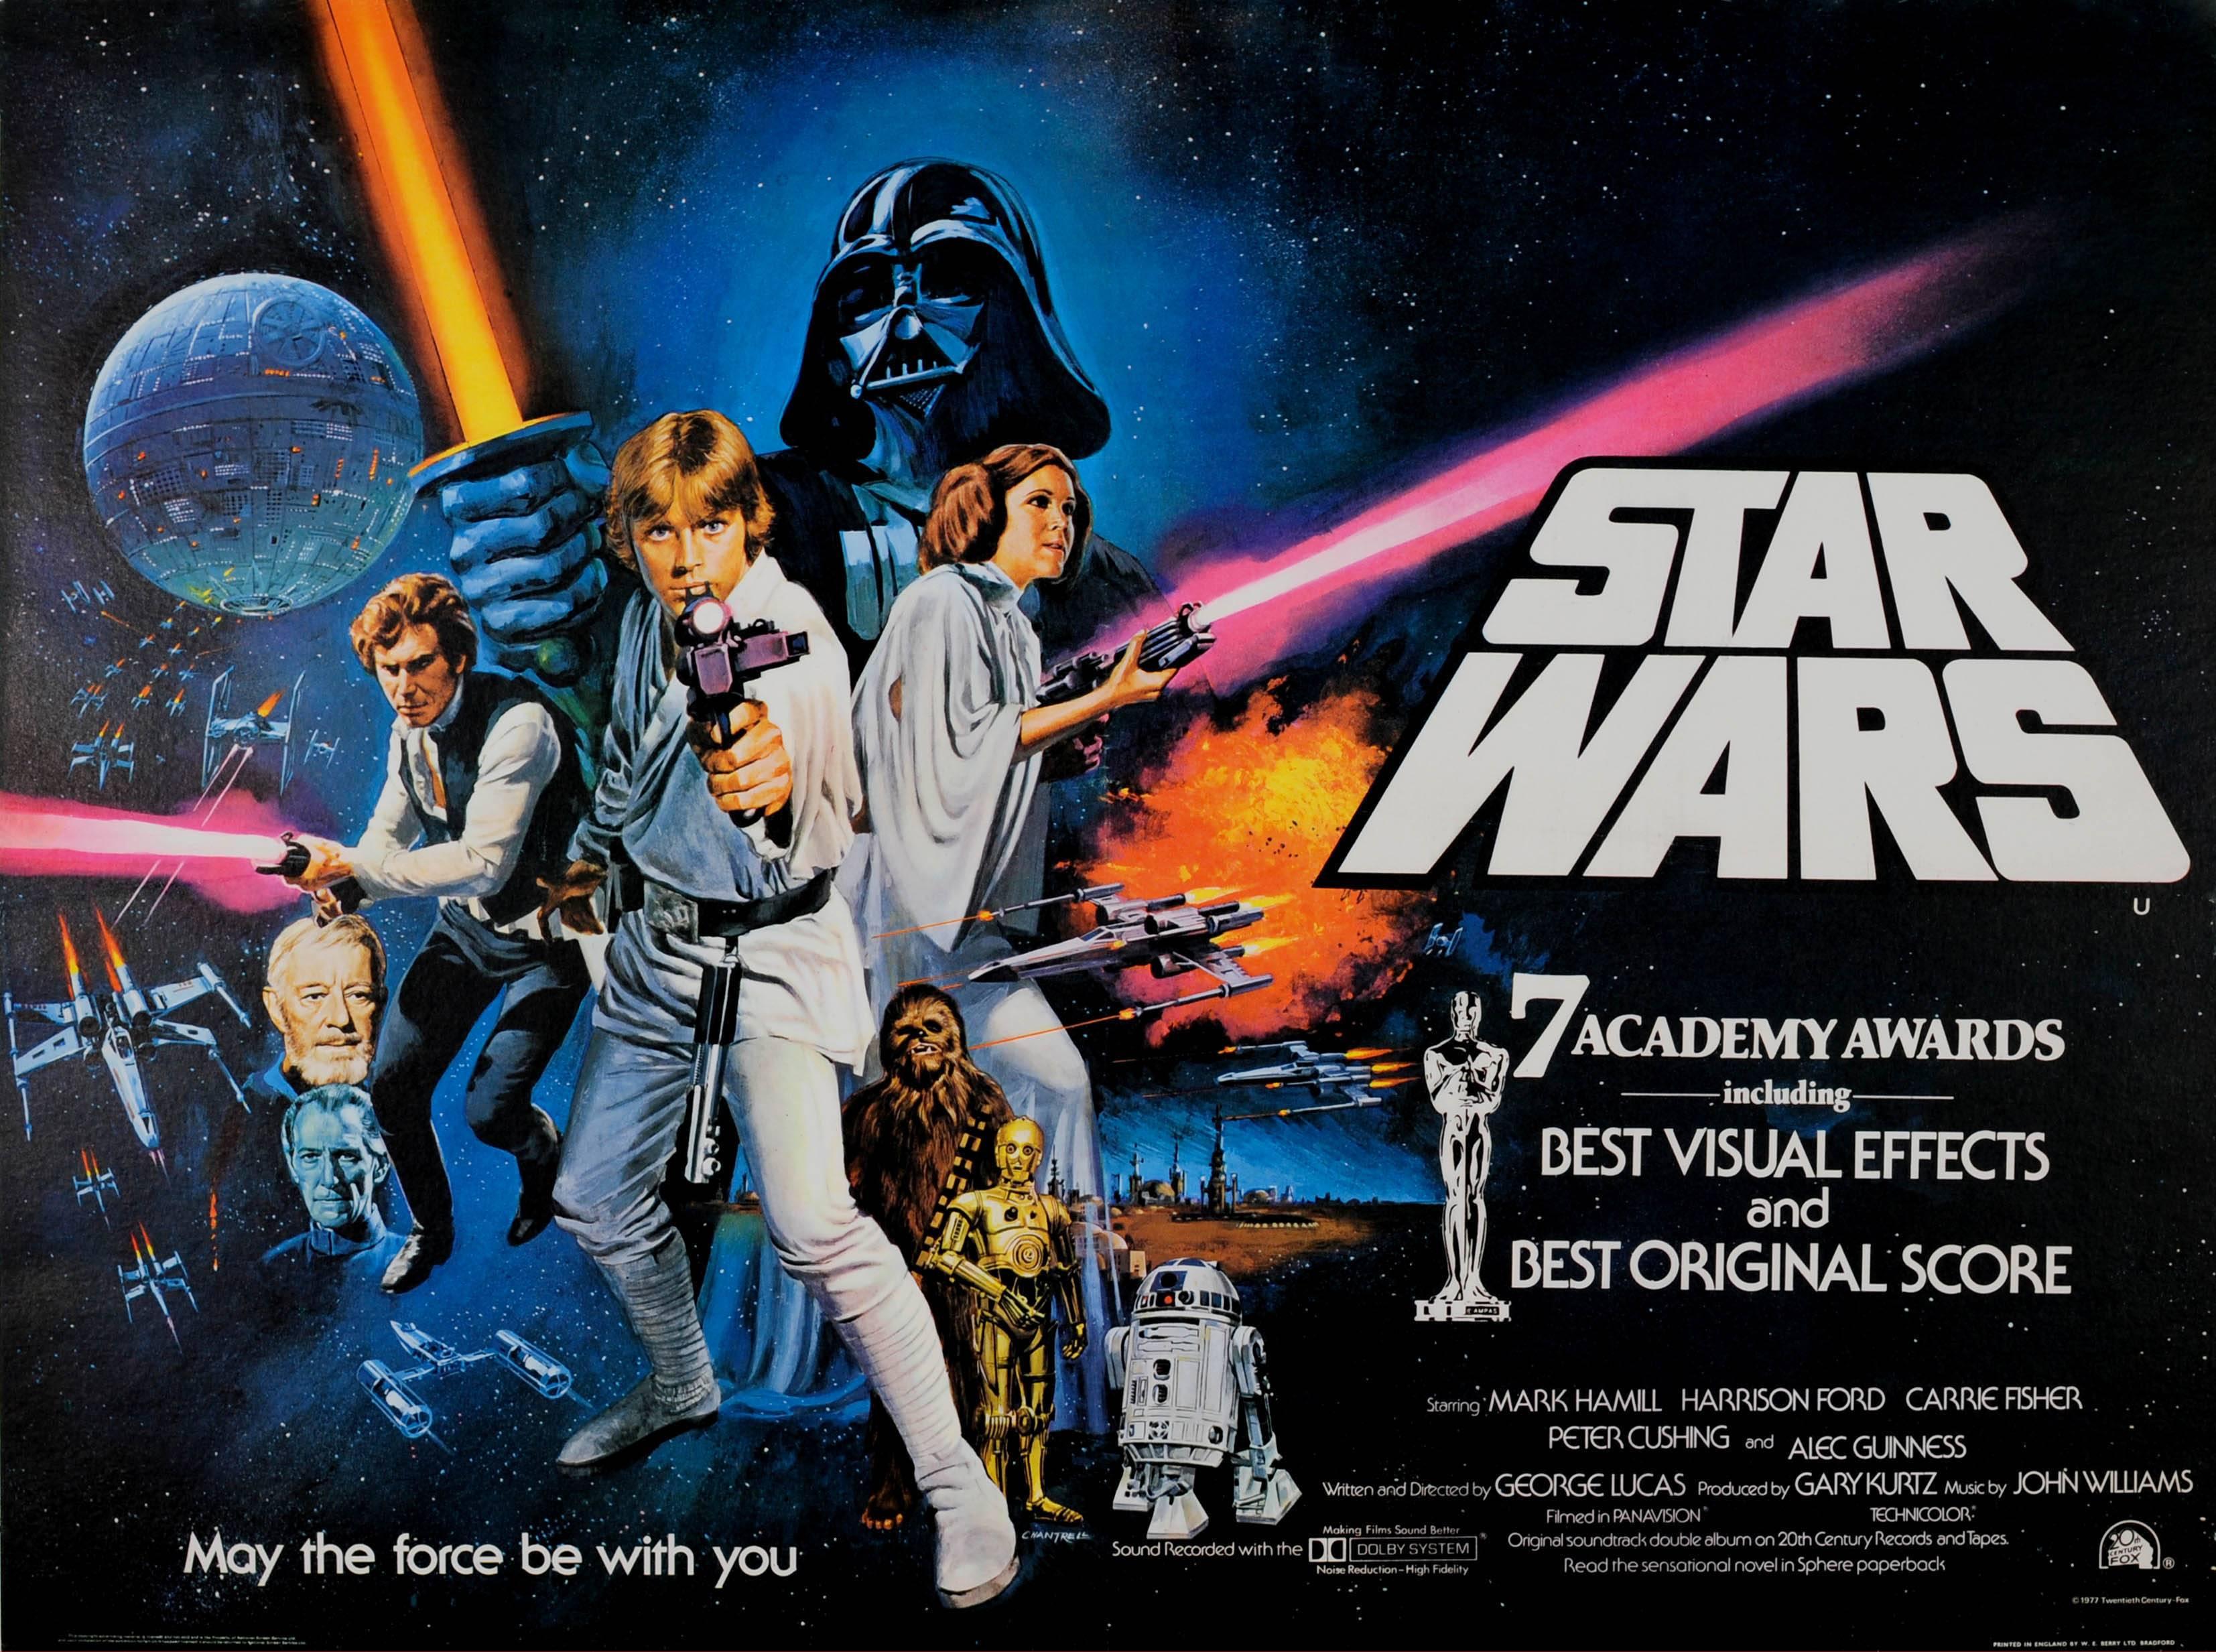 Tom William Chantrell Print - Original Vintage British Quad Sci-Fi Movie Poster For Star Wars 7 Academy Awards